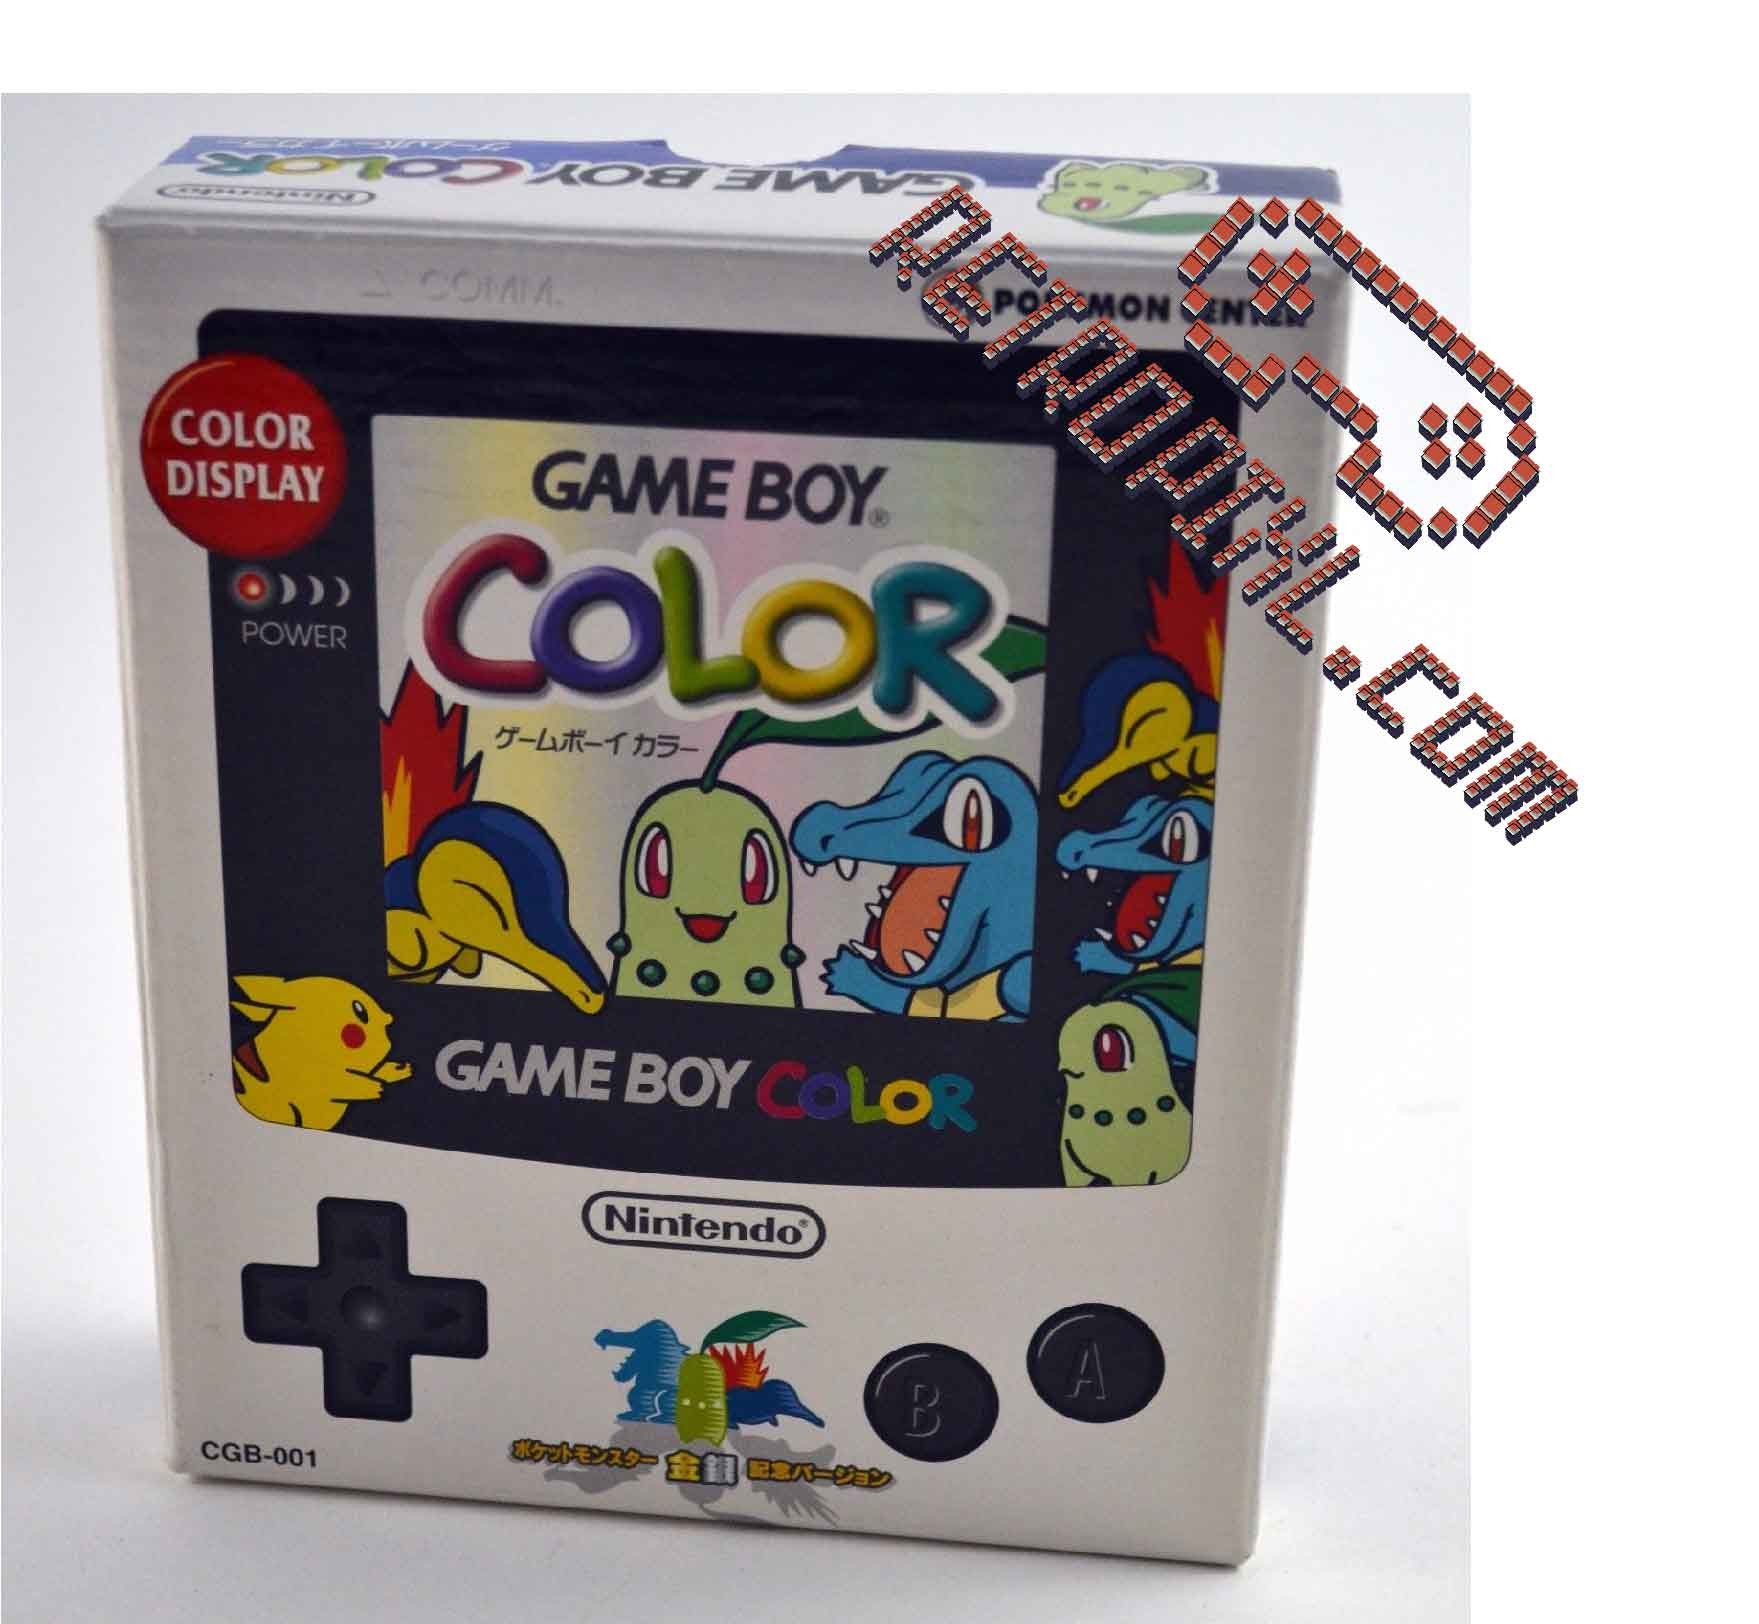  Pokemon, Silver Version : Nintendo Game Boy Color